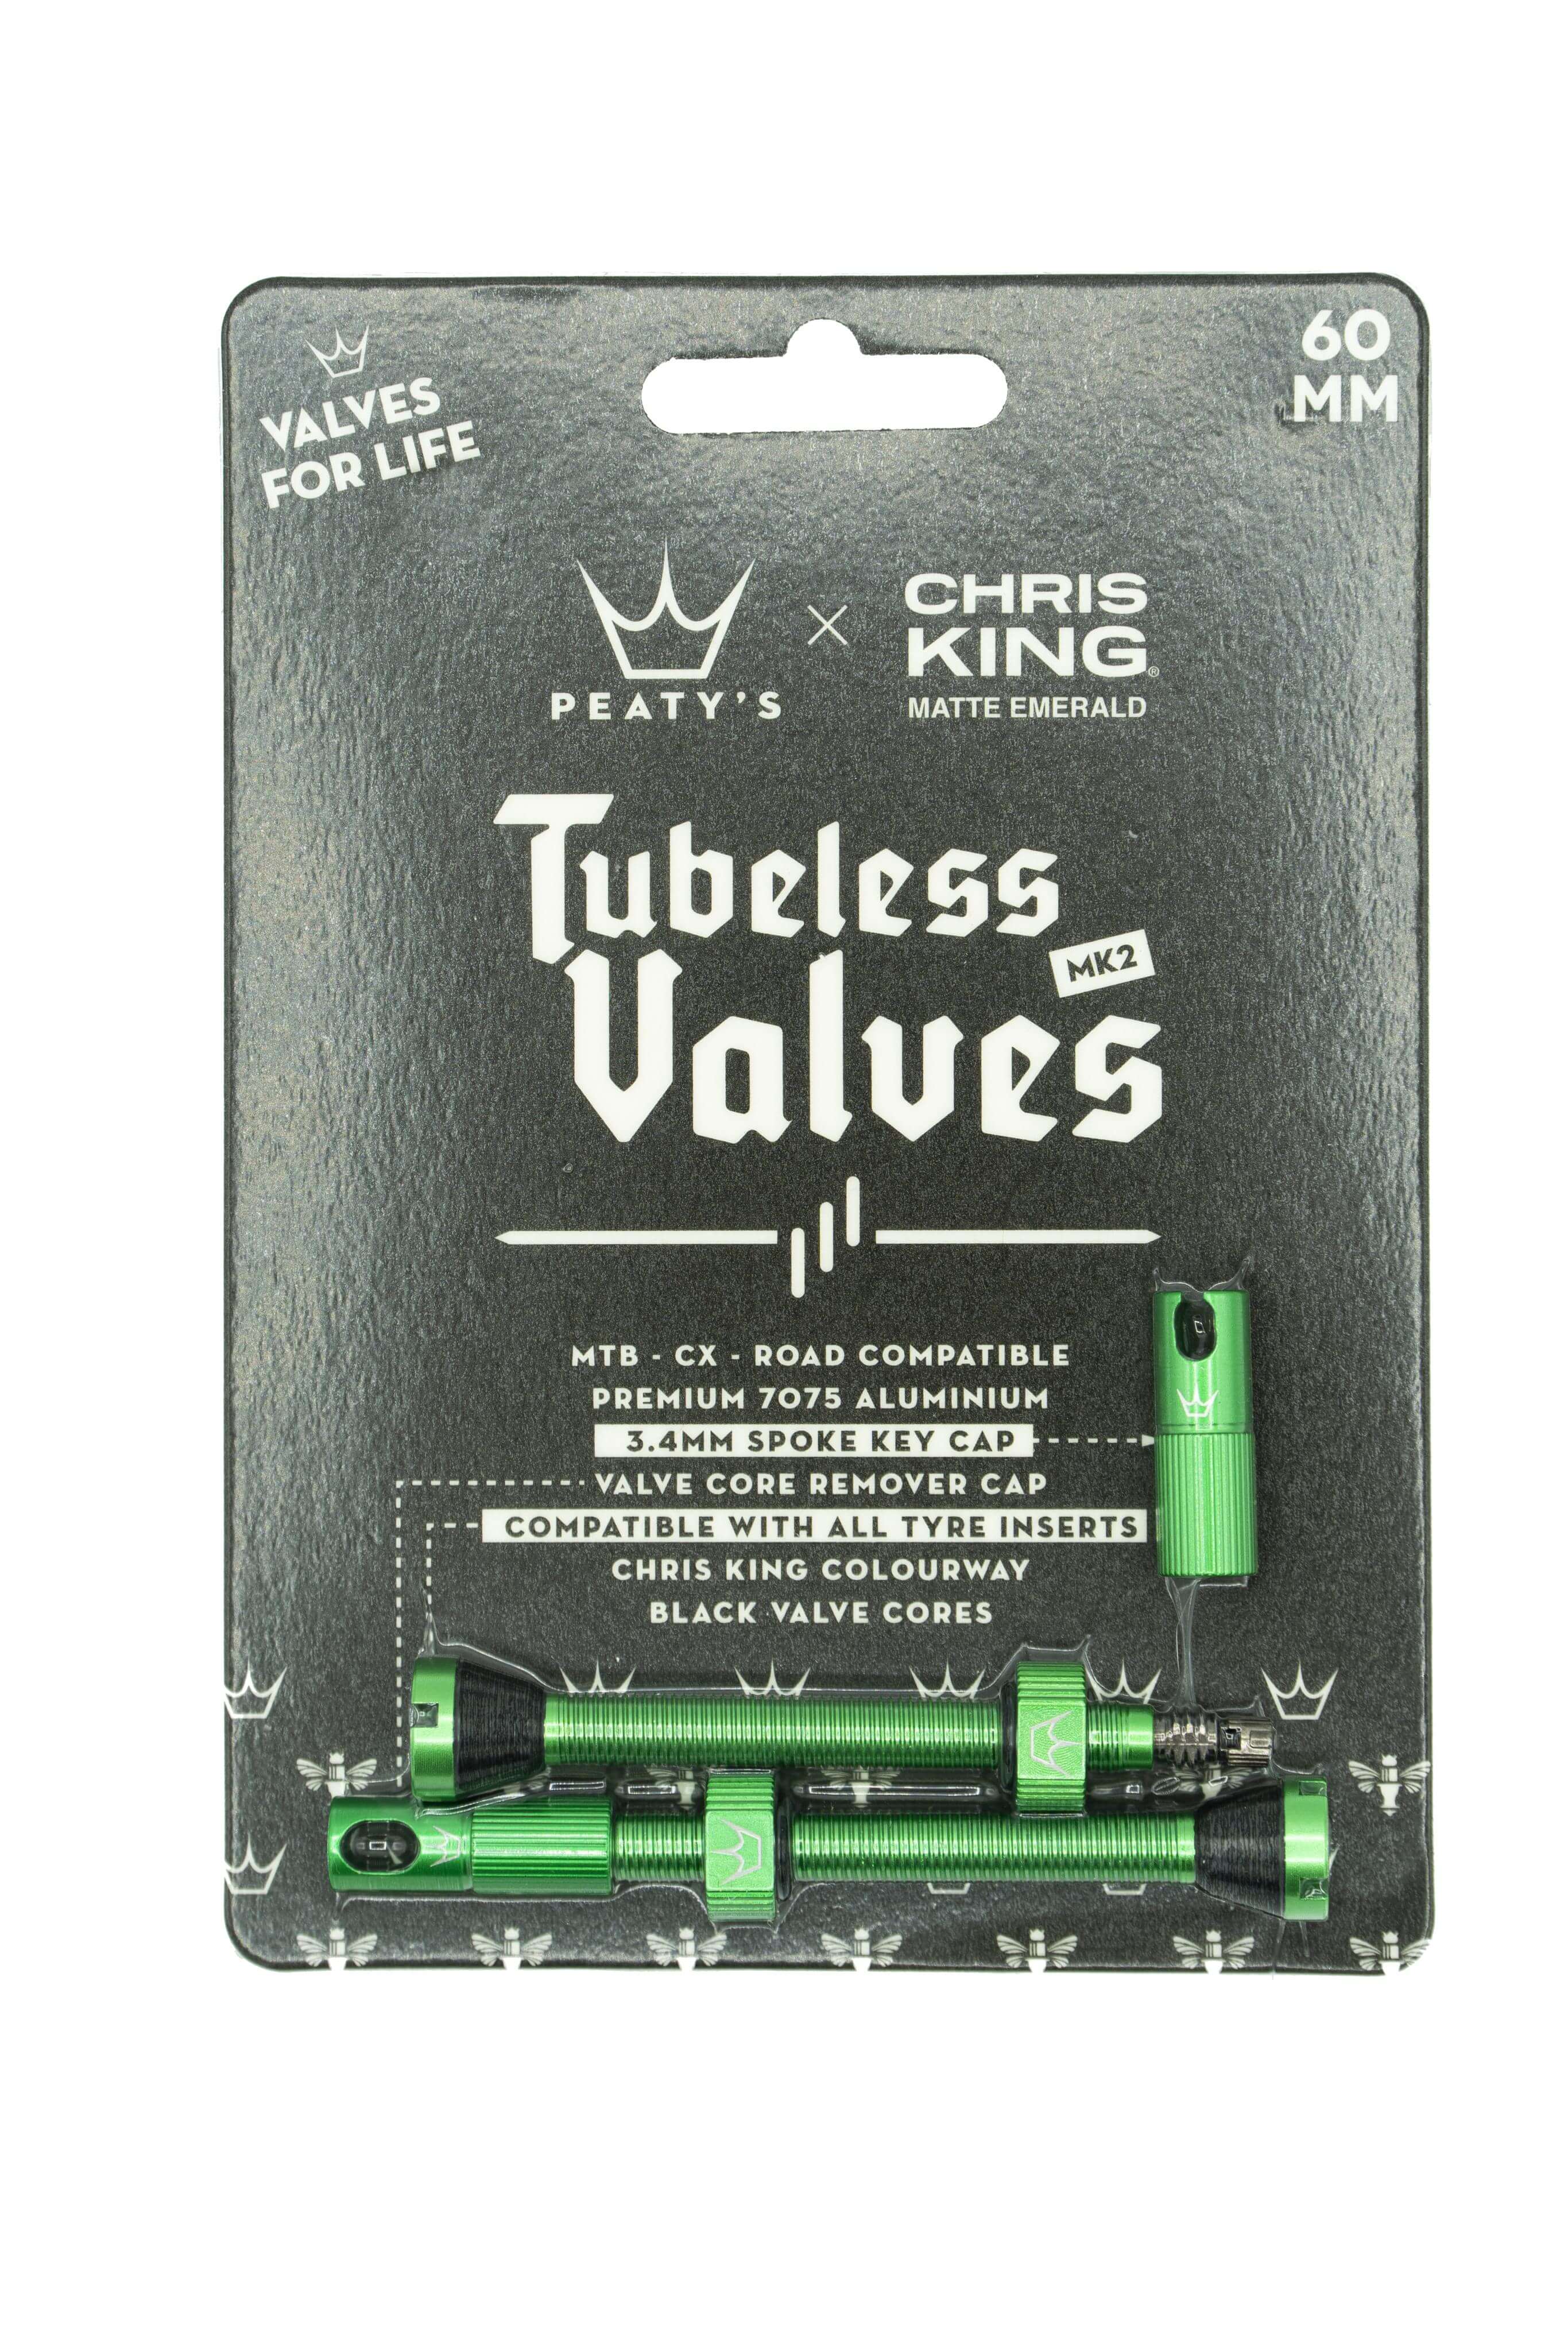 MK2 Valve 60mm Emerald - Packaged.jpg